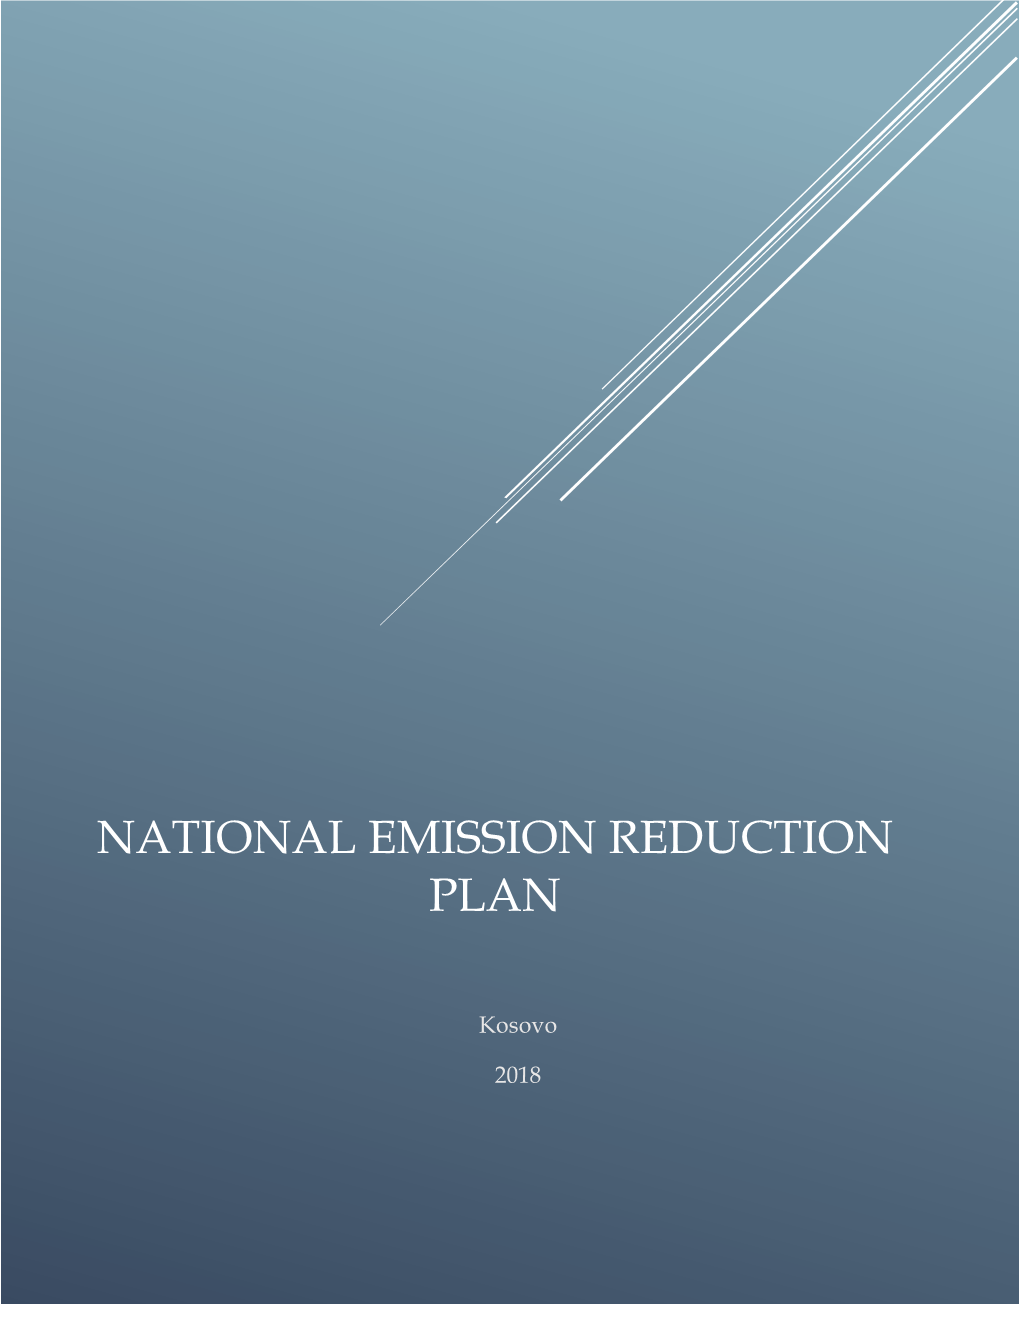 National Emission Reduction Plan